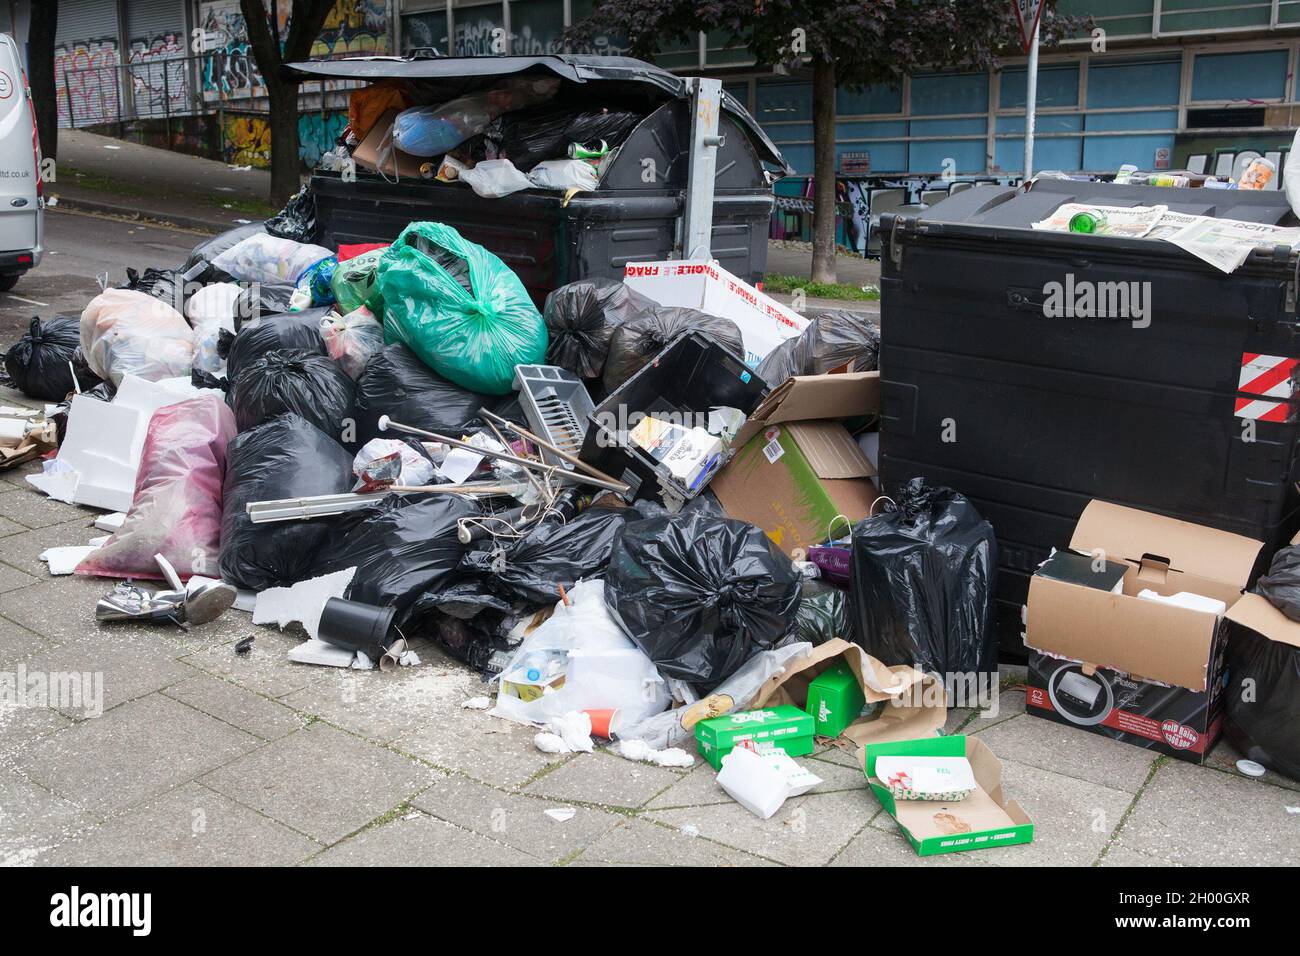 Overflowing rubbish bins in Brighton, East Sussex, UK Stock Photo